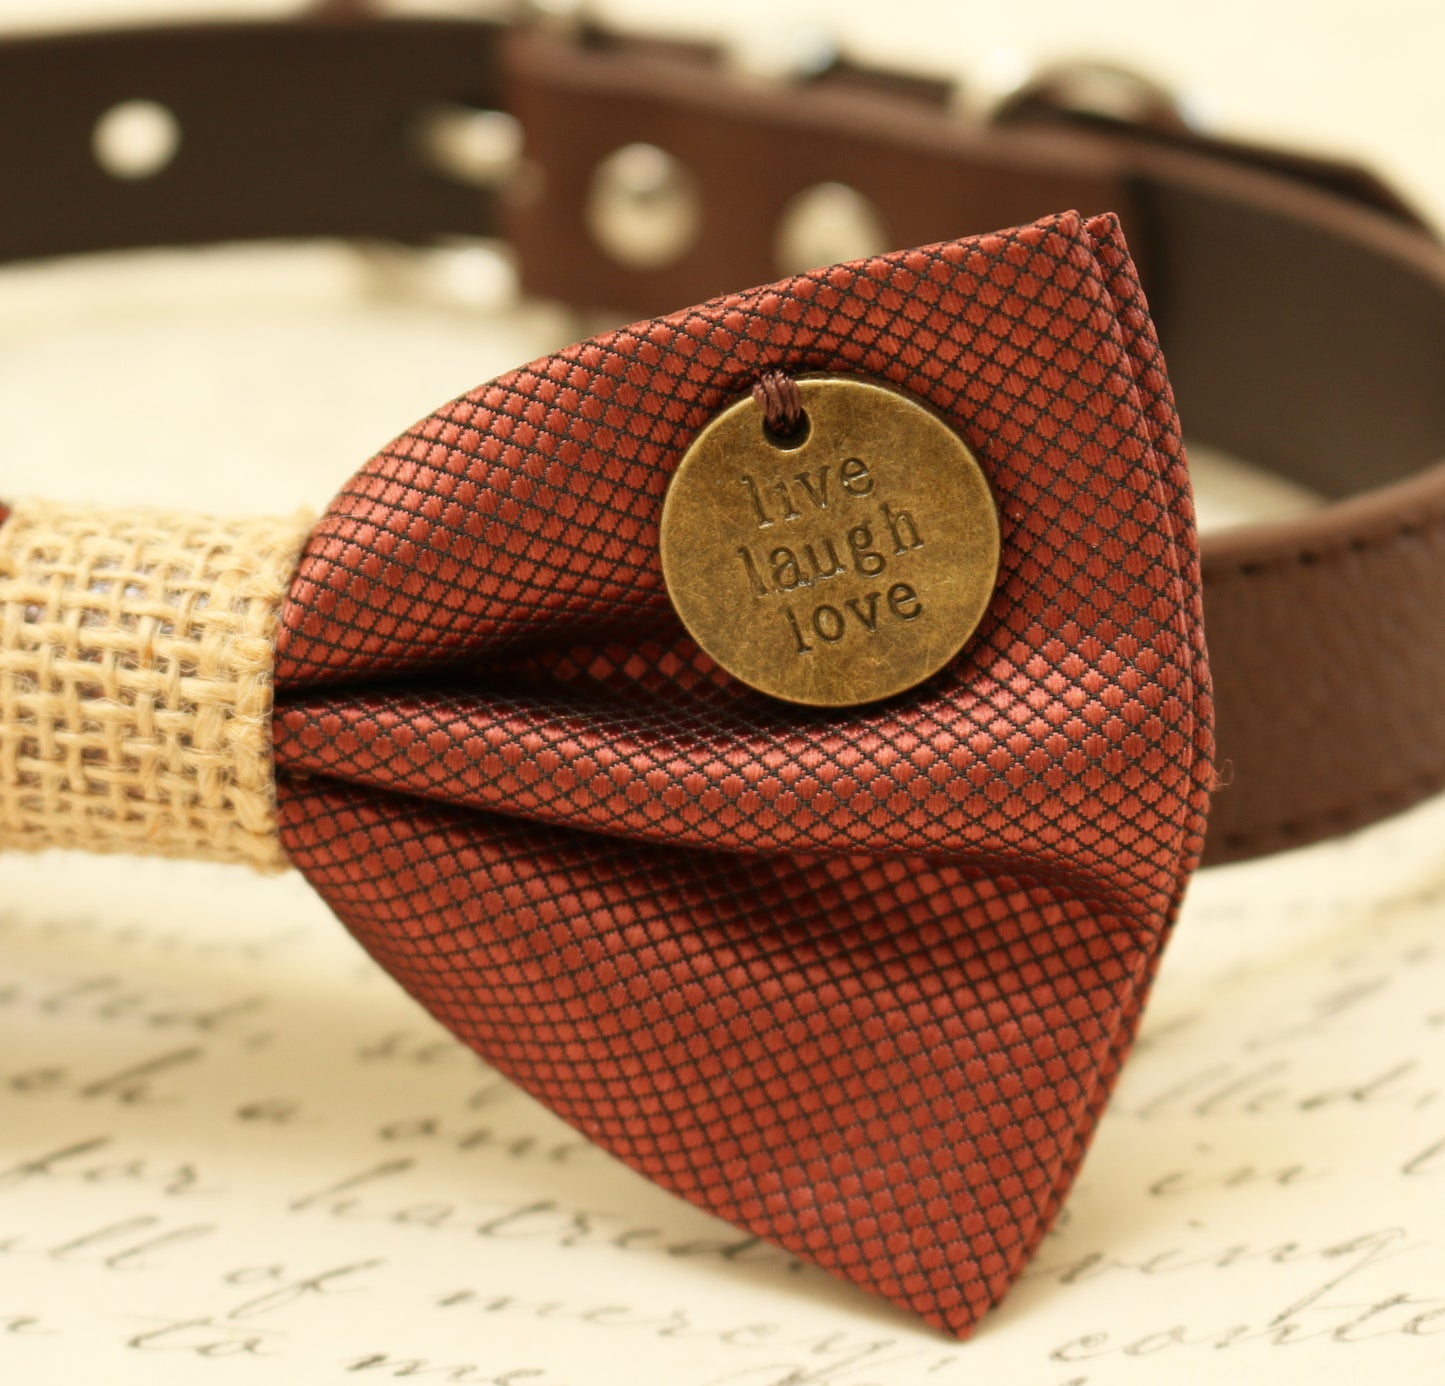 Brown Dog Bow Tie attached to brown dog collar, Pet wedding accessory, Burlap wedding , Wedding dog collar